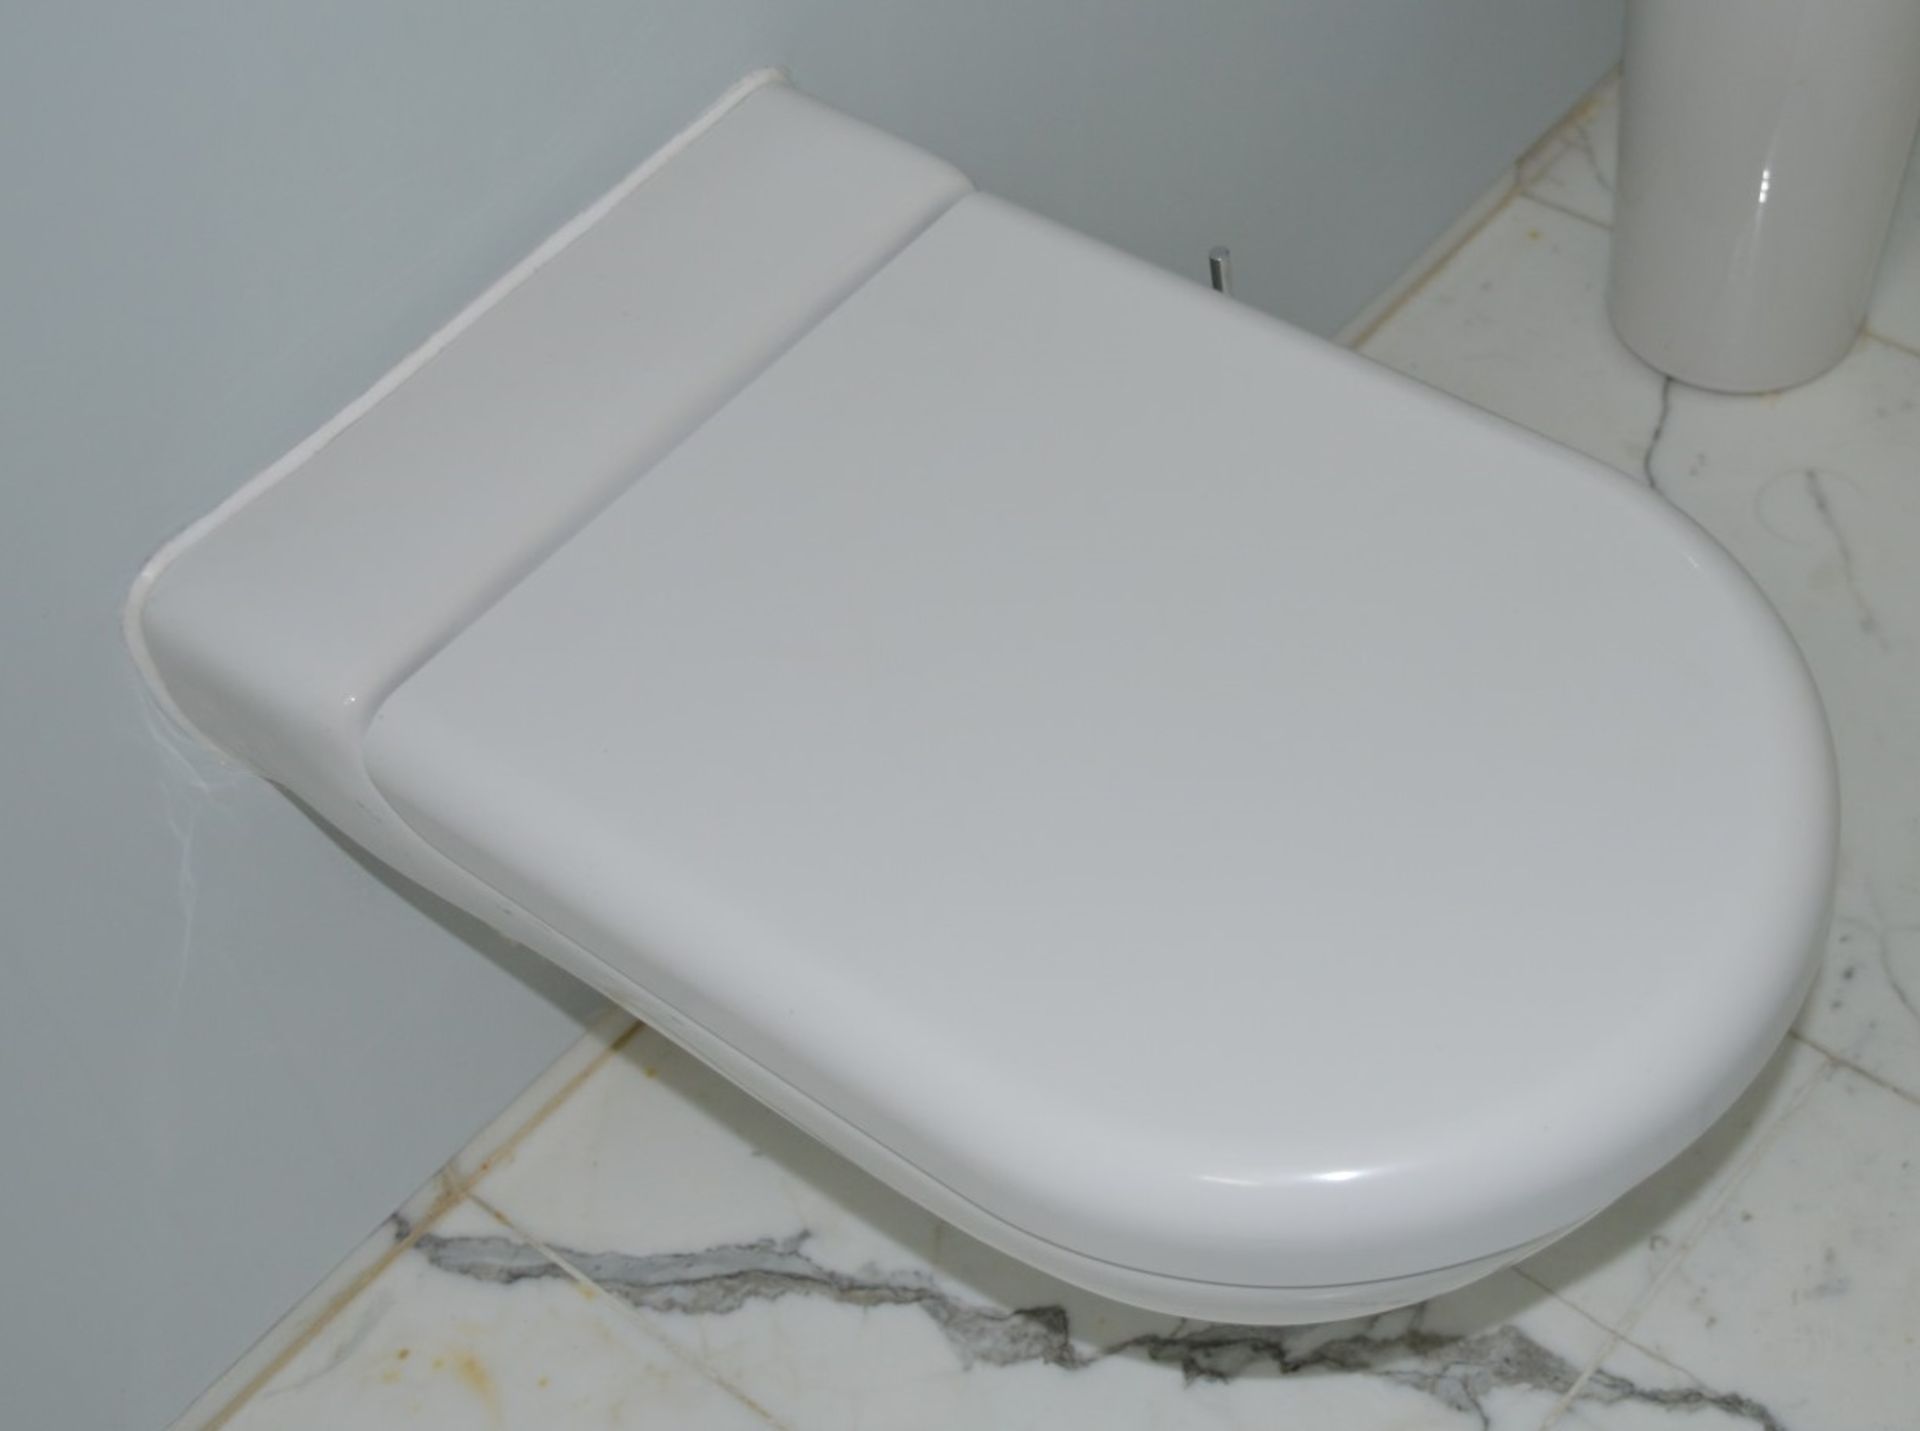 1 x Bathroom Suite Including Duravit Starck Sink Basin, Dorn Bracht Mixer Tap, Duravit Wall Hung - Image 20 of 29